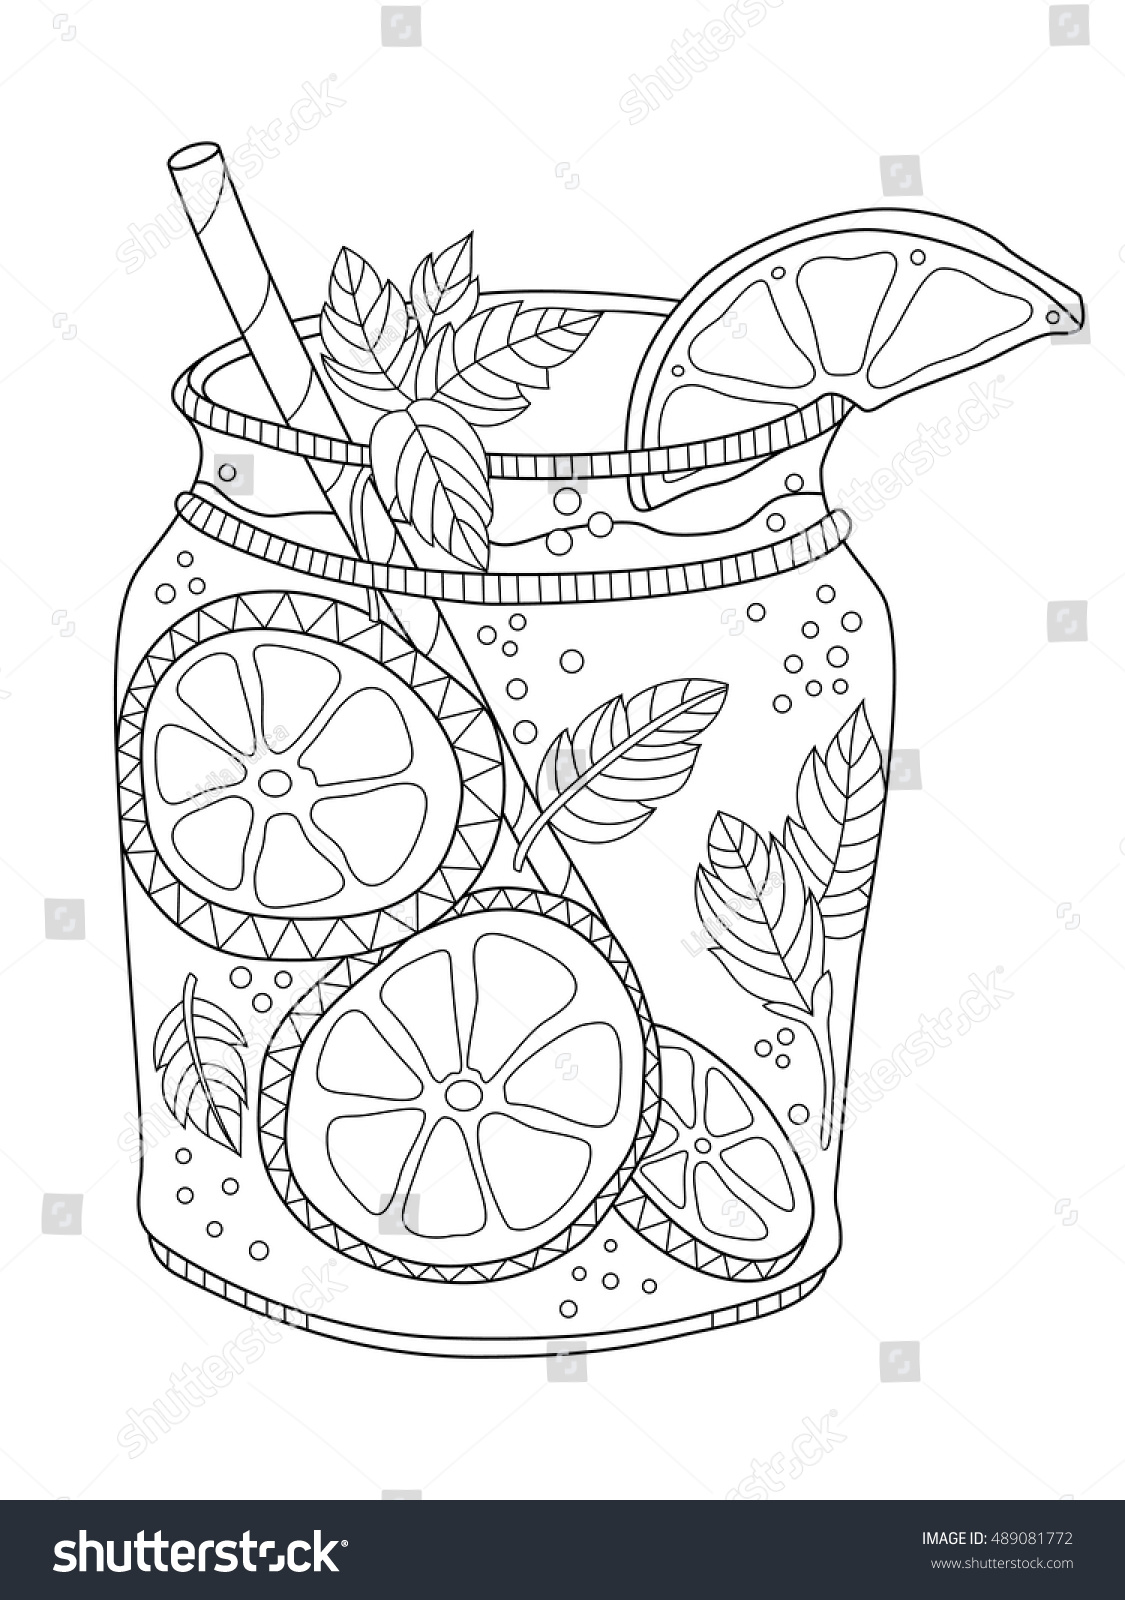 Lemonade jar coloring page adults zentangle stock vector royalty free